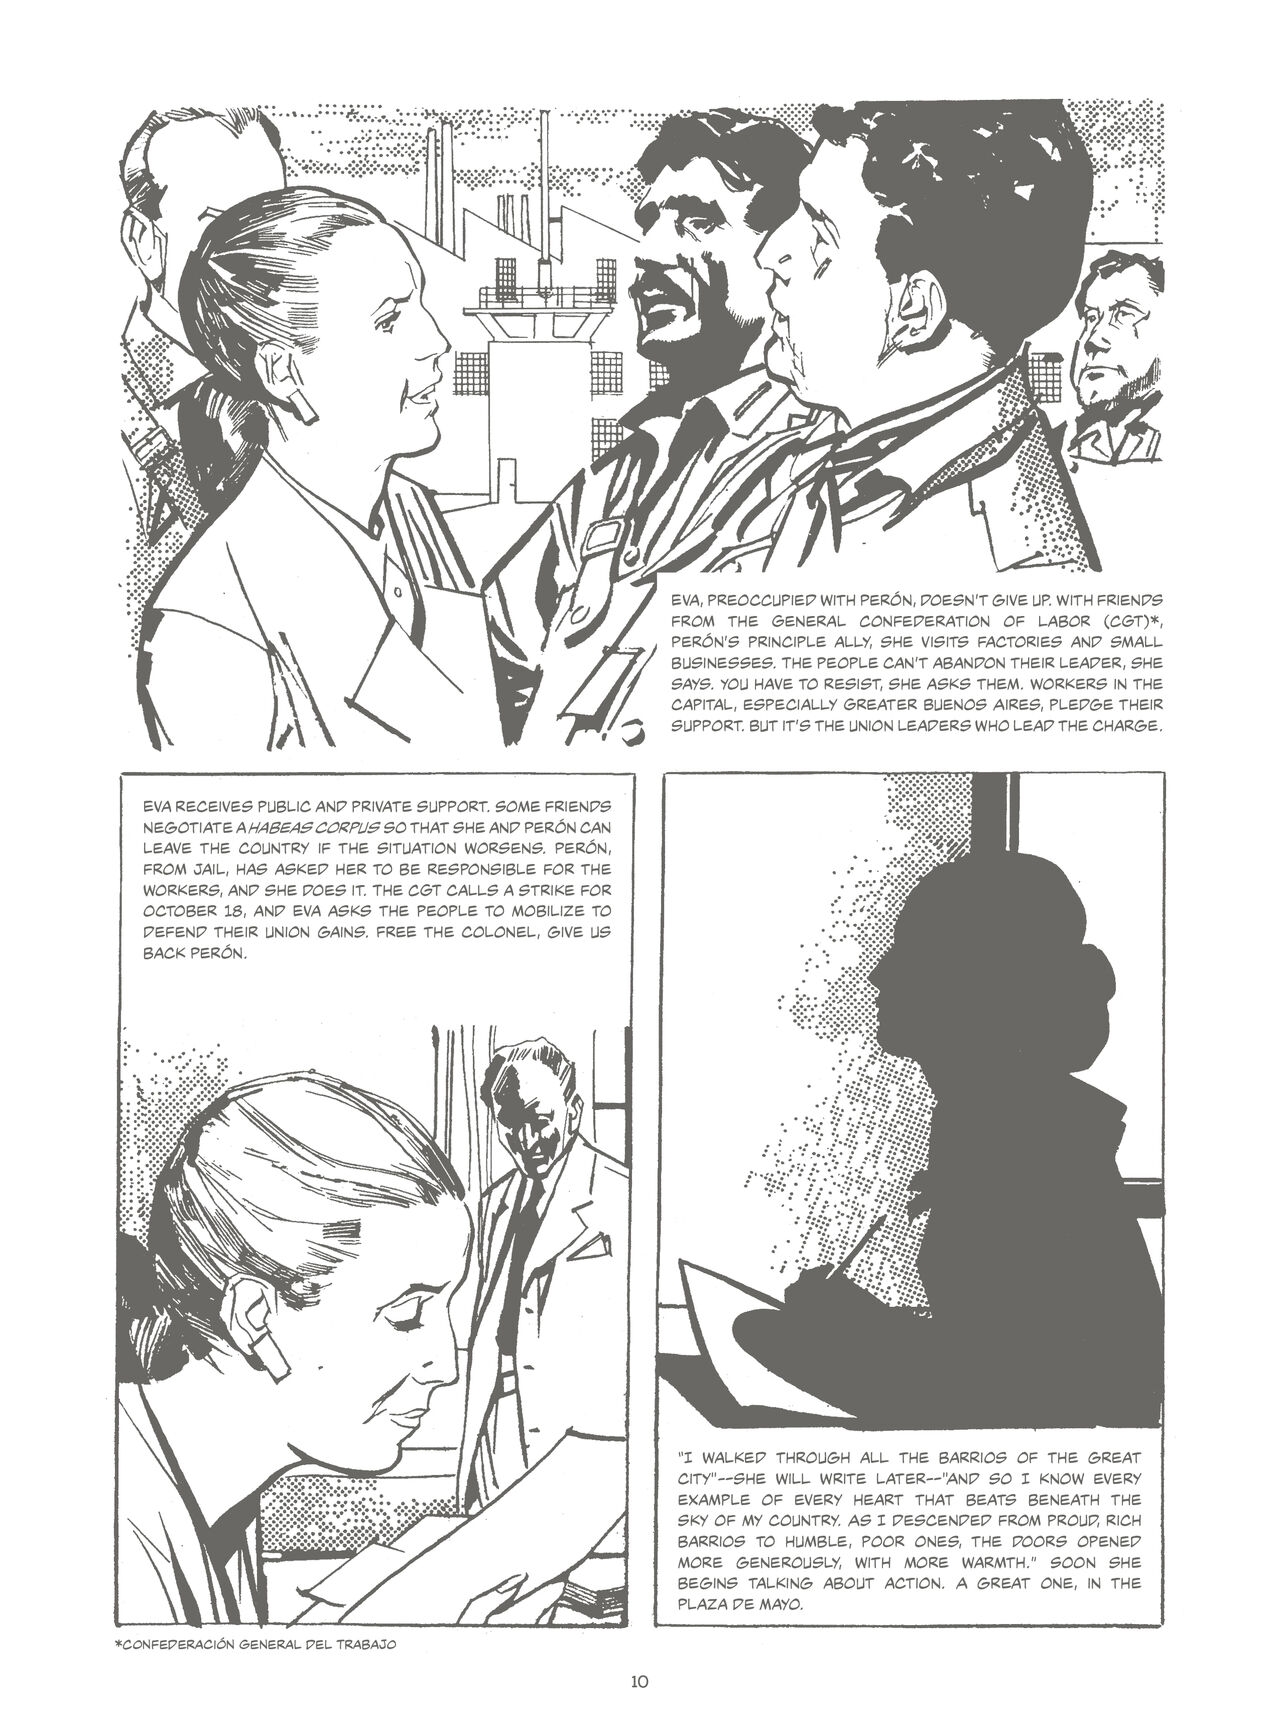 Evita - The Life and Work of Eva Perón 14